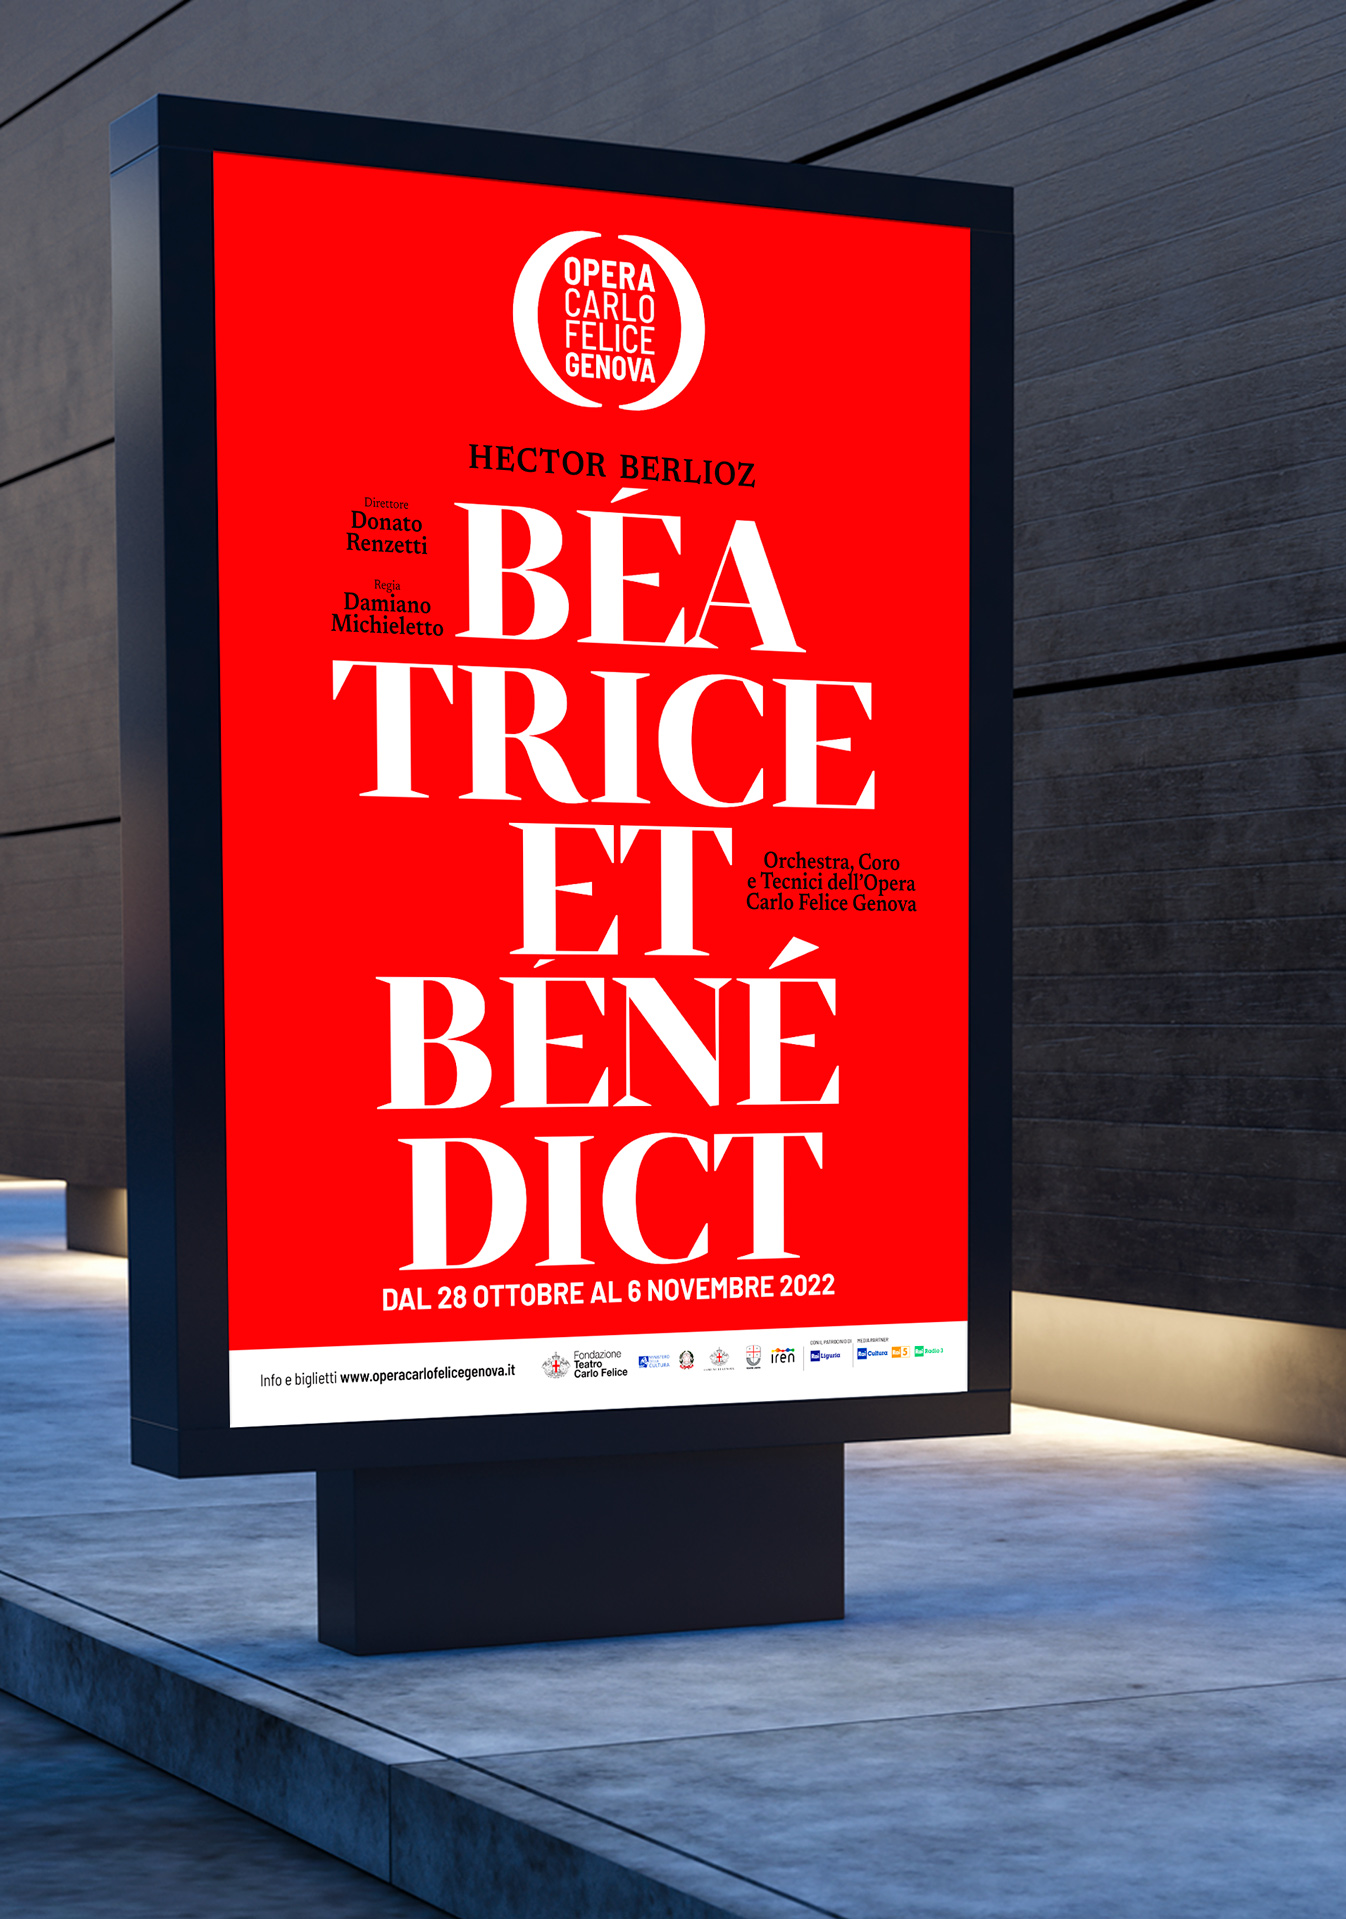 Opera Carlo Felice VO Beatrice et Benedicte Rossetti Brand Design